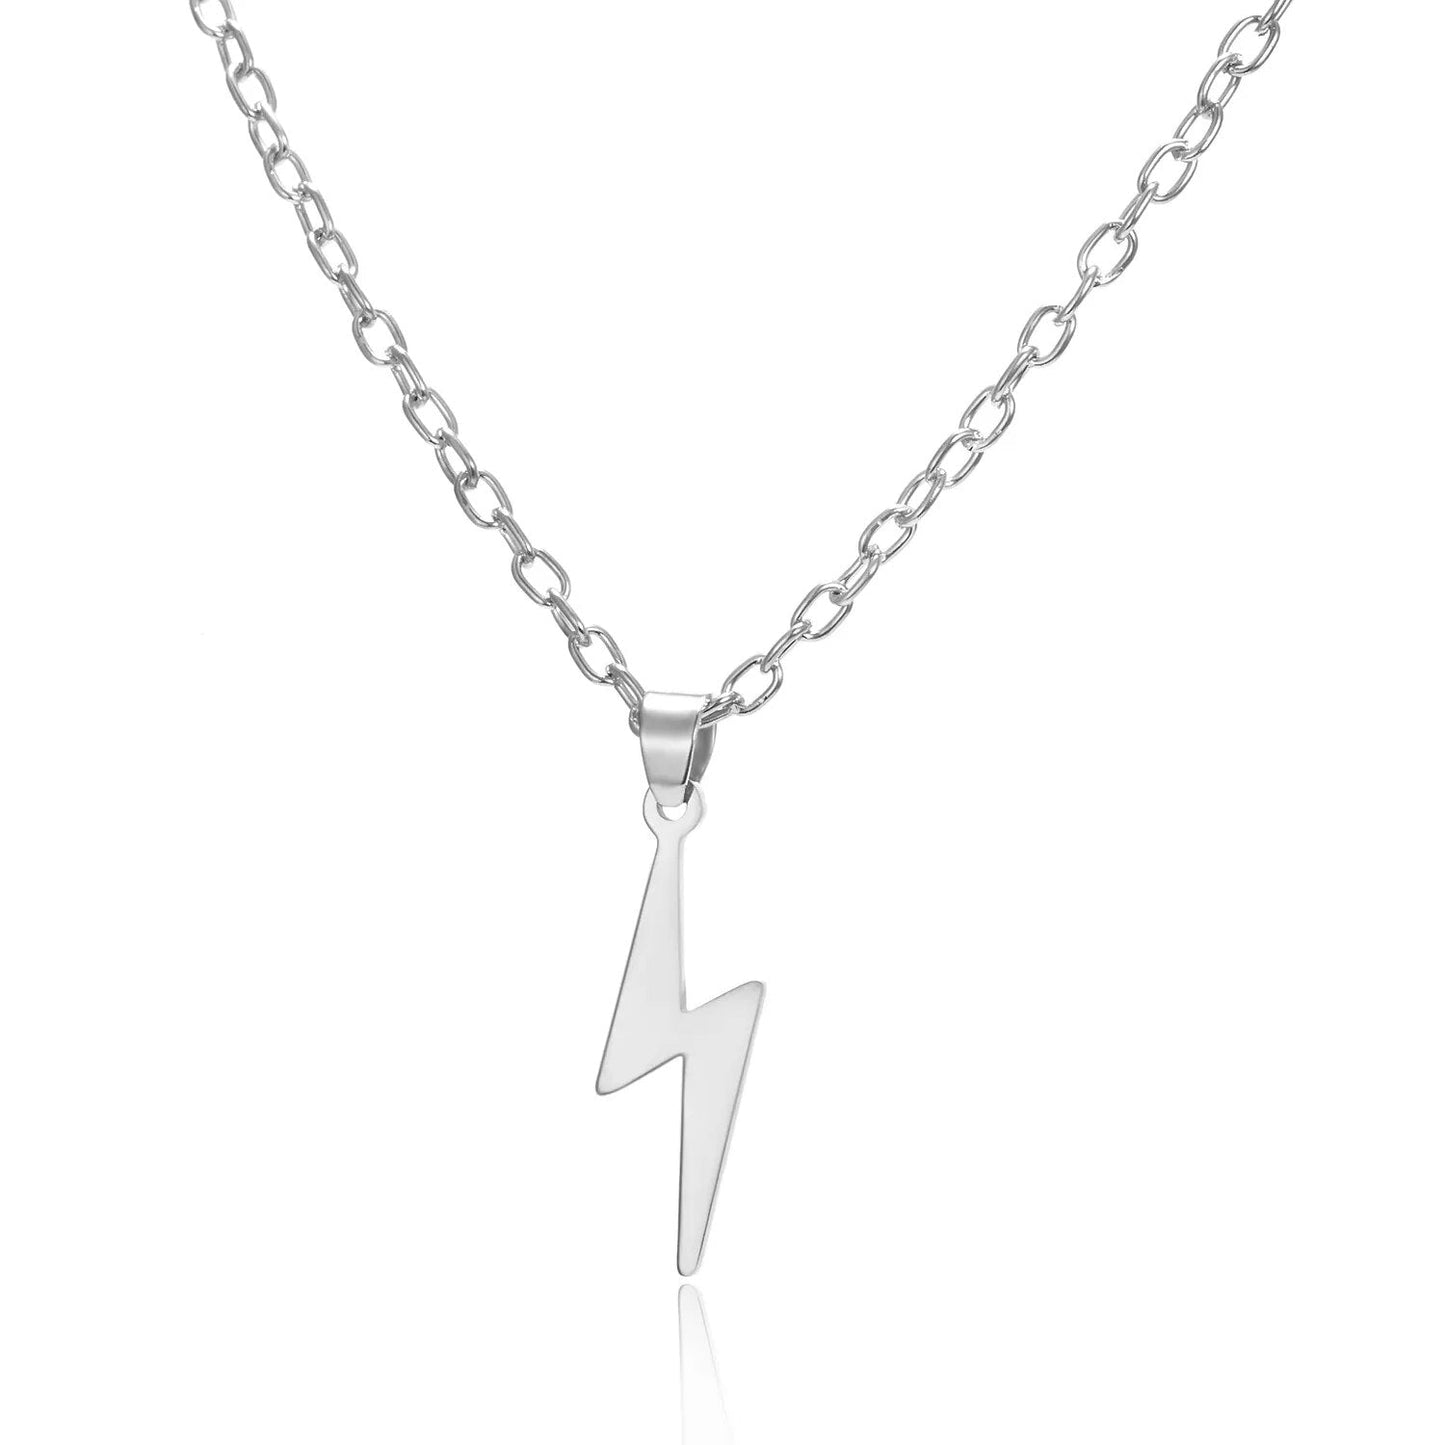 Rinhoo Stainless Steel Necklace For Women Men Long Chain Small Lightning Pendant Necklace